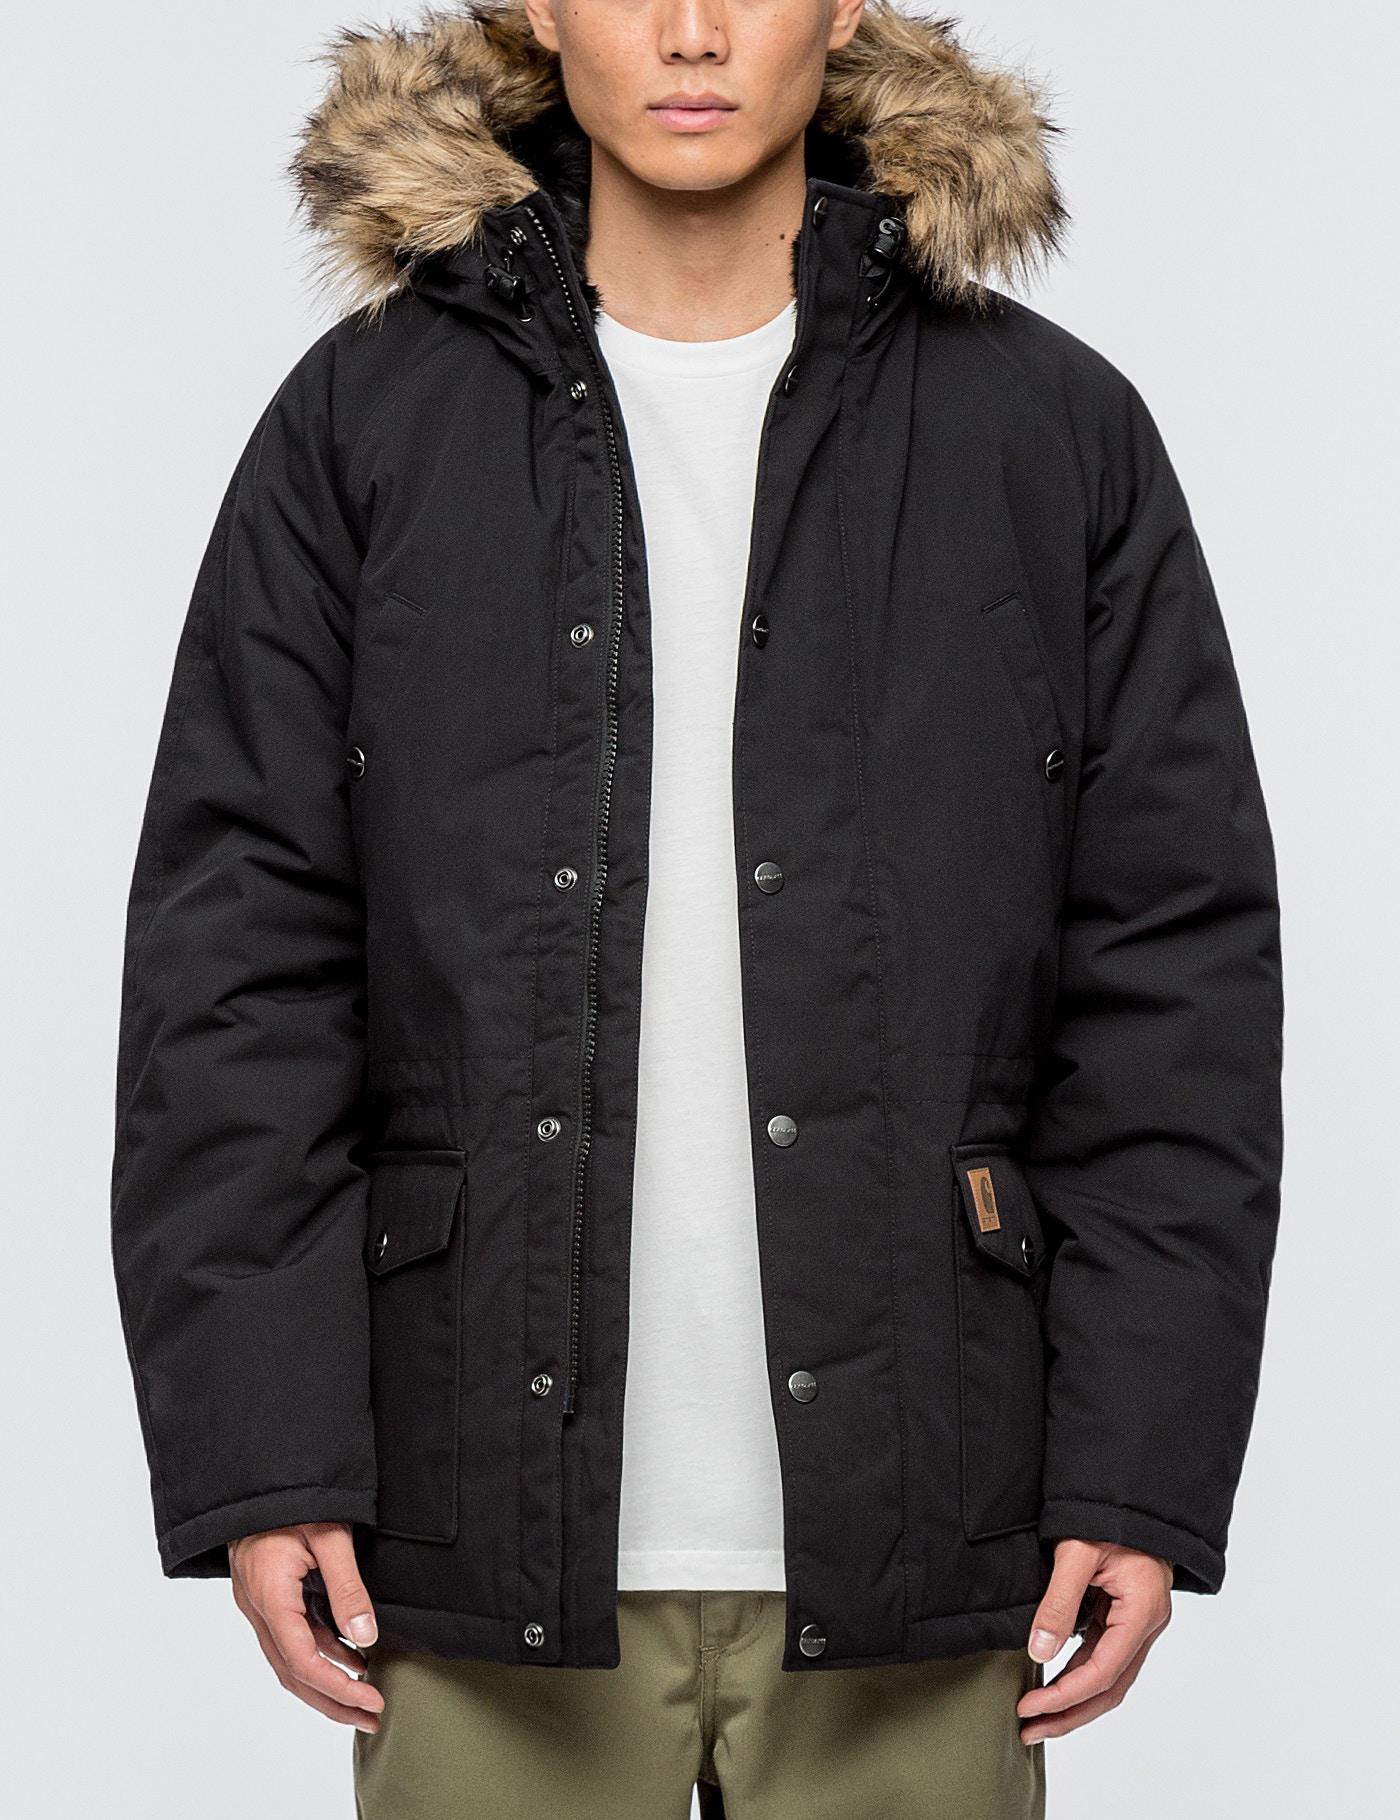 Carhartt WIP Synthetic Trapper Jacket in Black for Men - Lyst